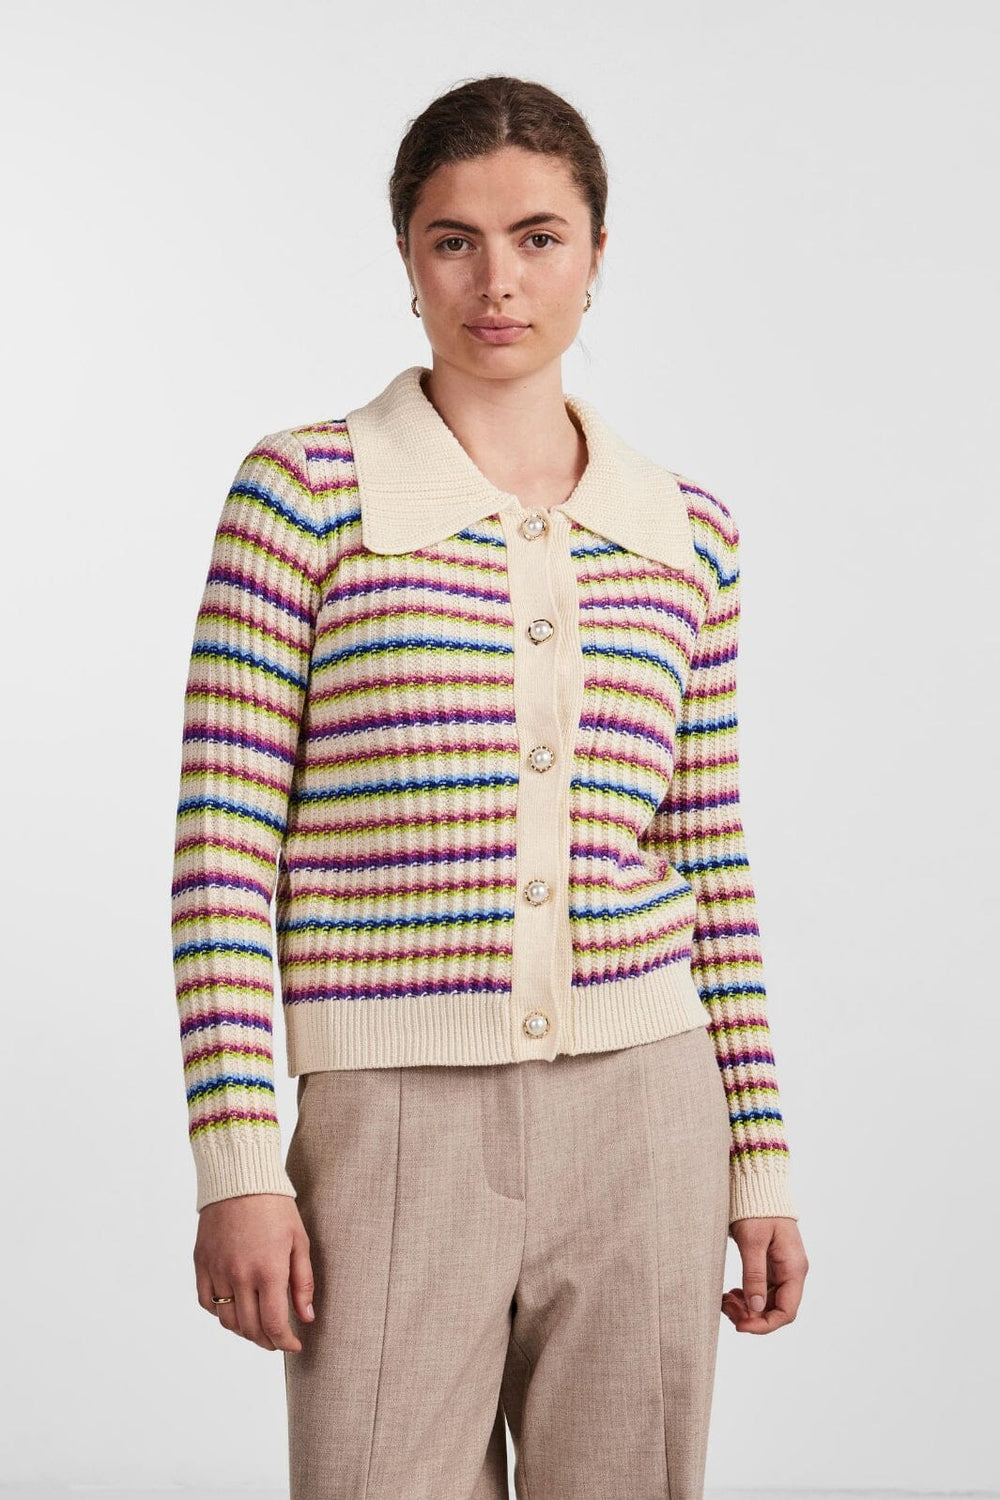 Y.A.S - Yasboogie Ls Knit Cardigan S. - Birch Multi Colour Cardigans 